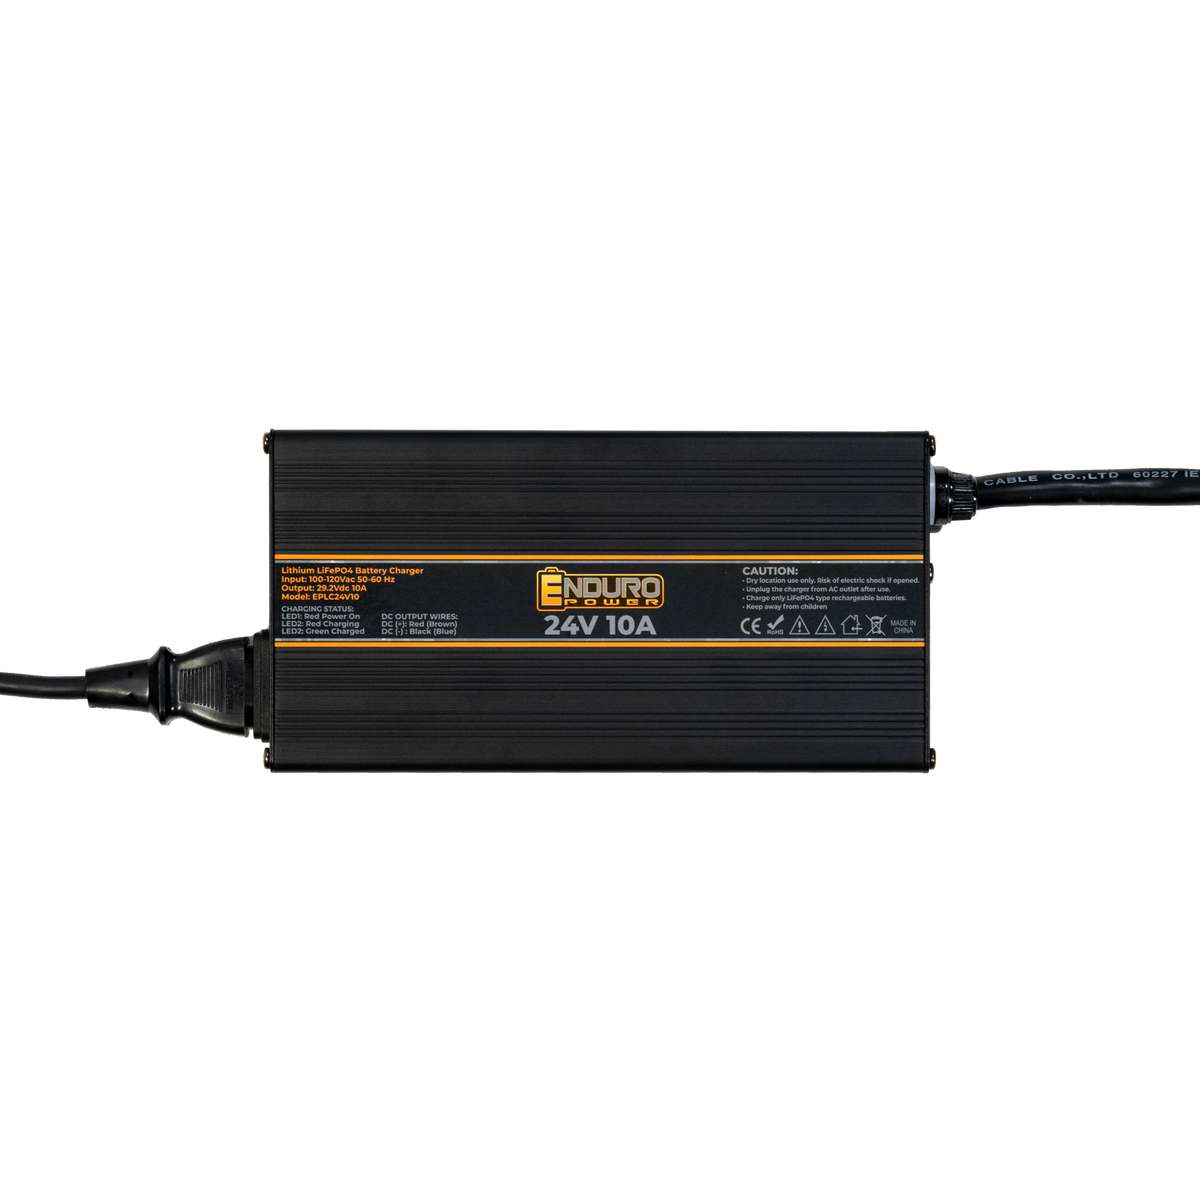 Enduro Power 24V 10A Battery Charger – Enduro Power Lithium Batteries - Long  Lasting Performance